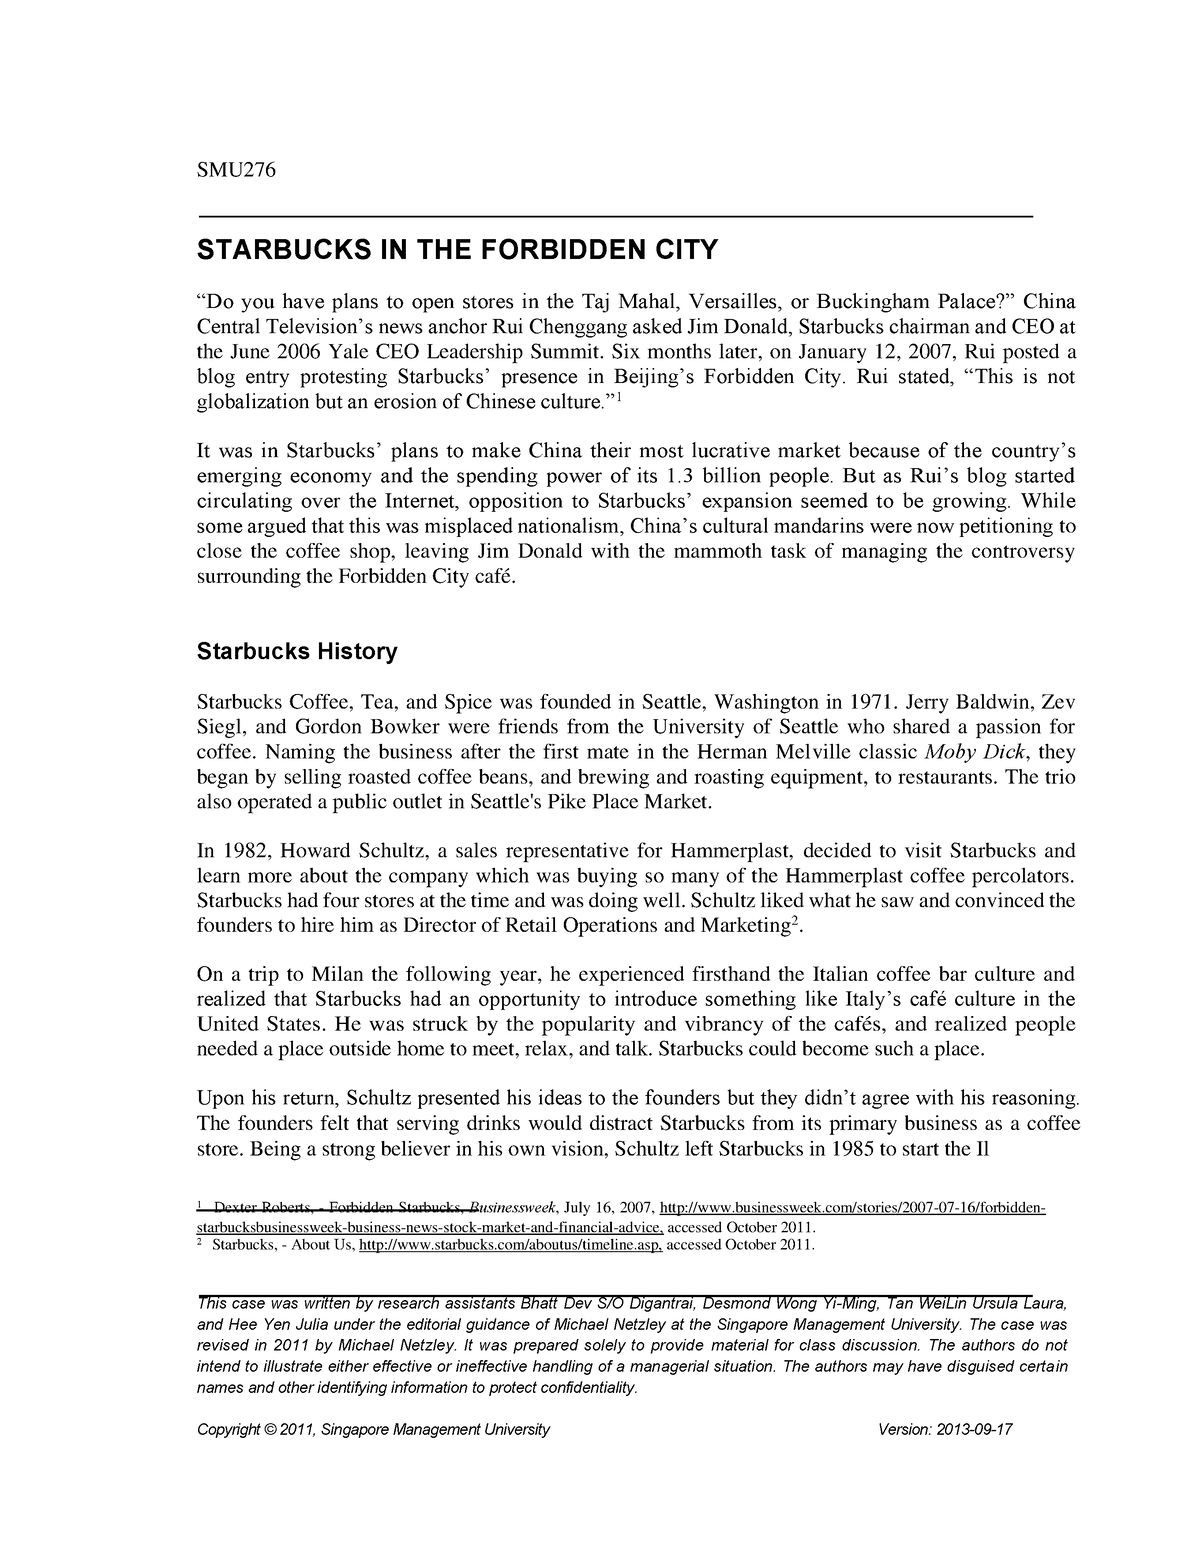 starbucks in forbidden city case study